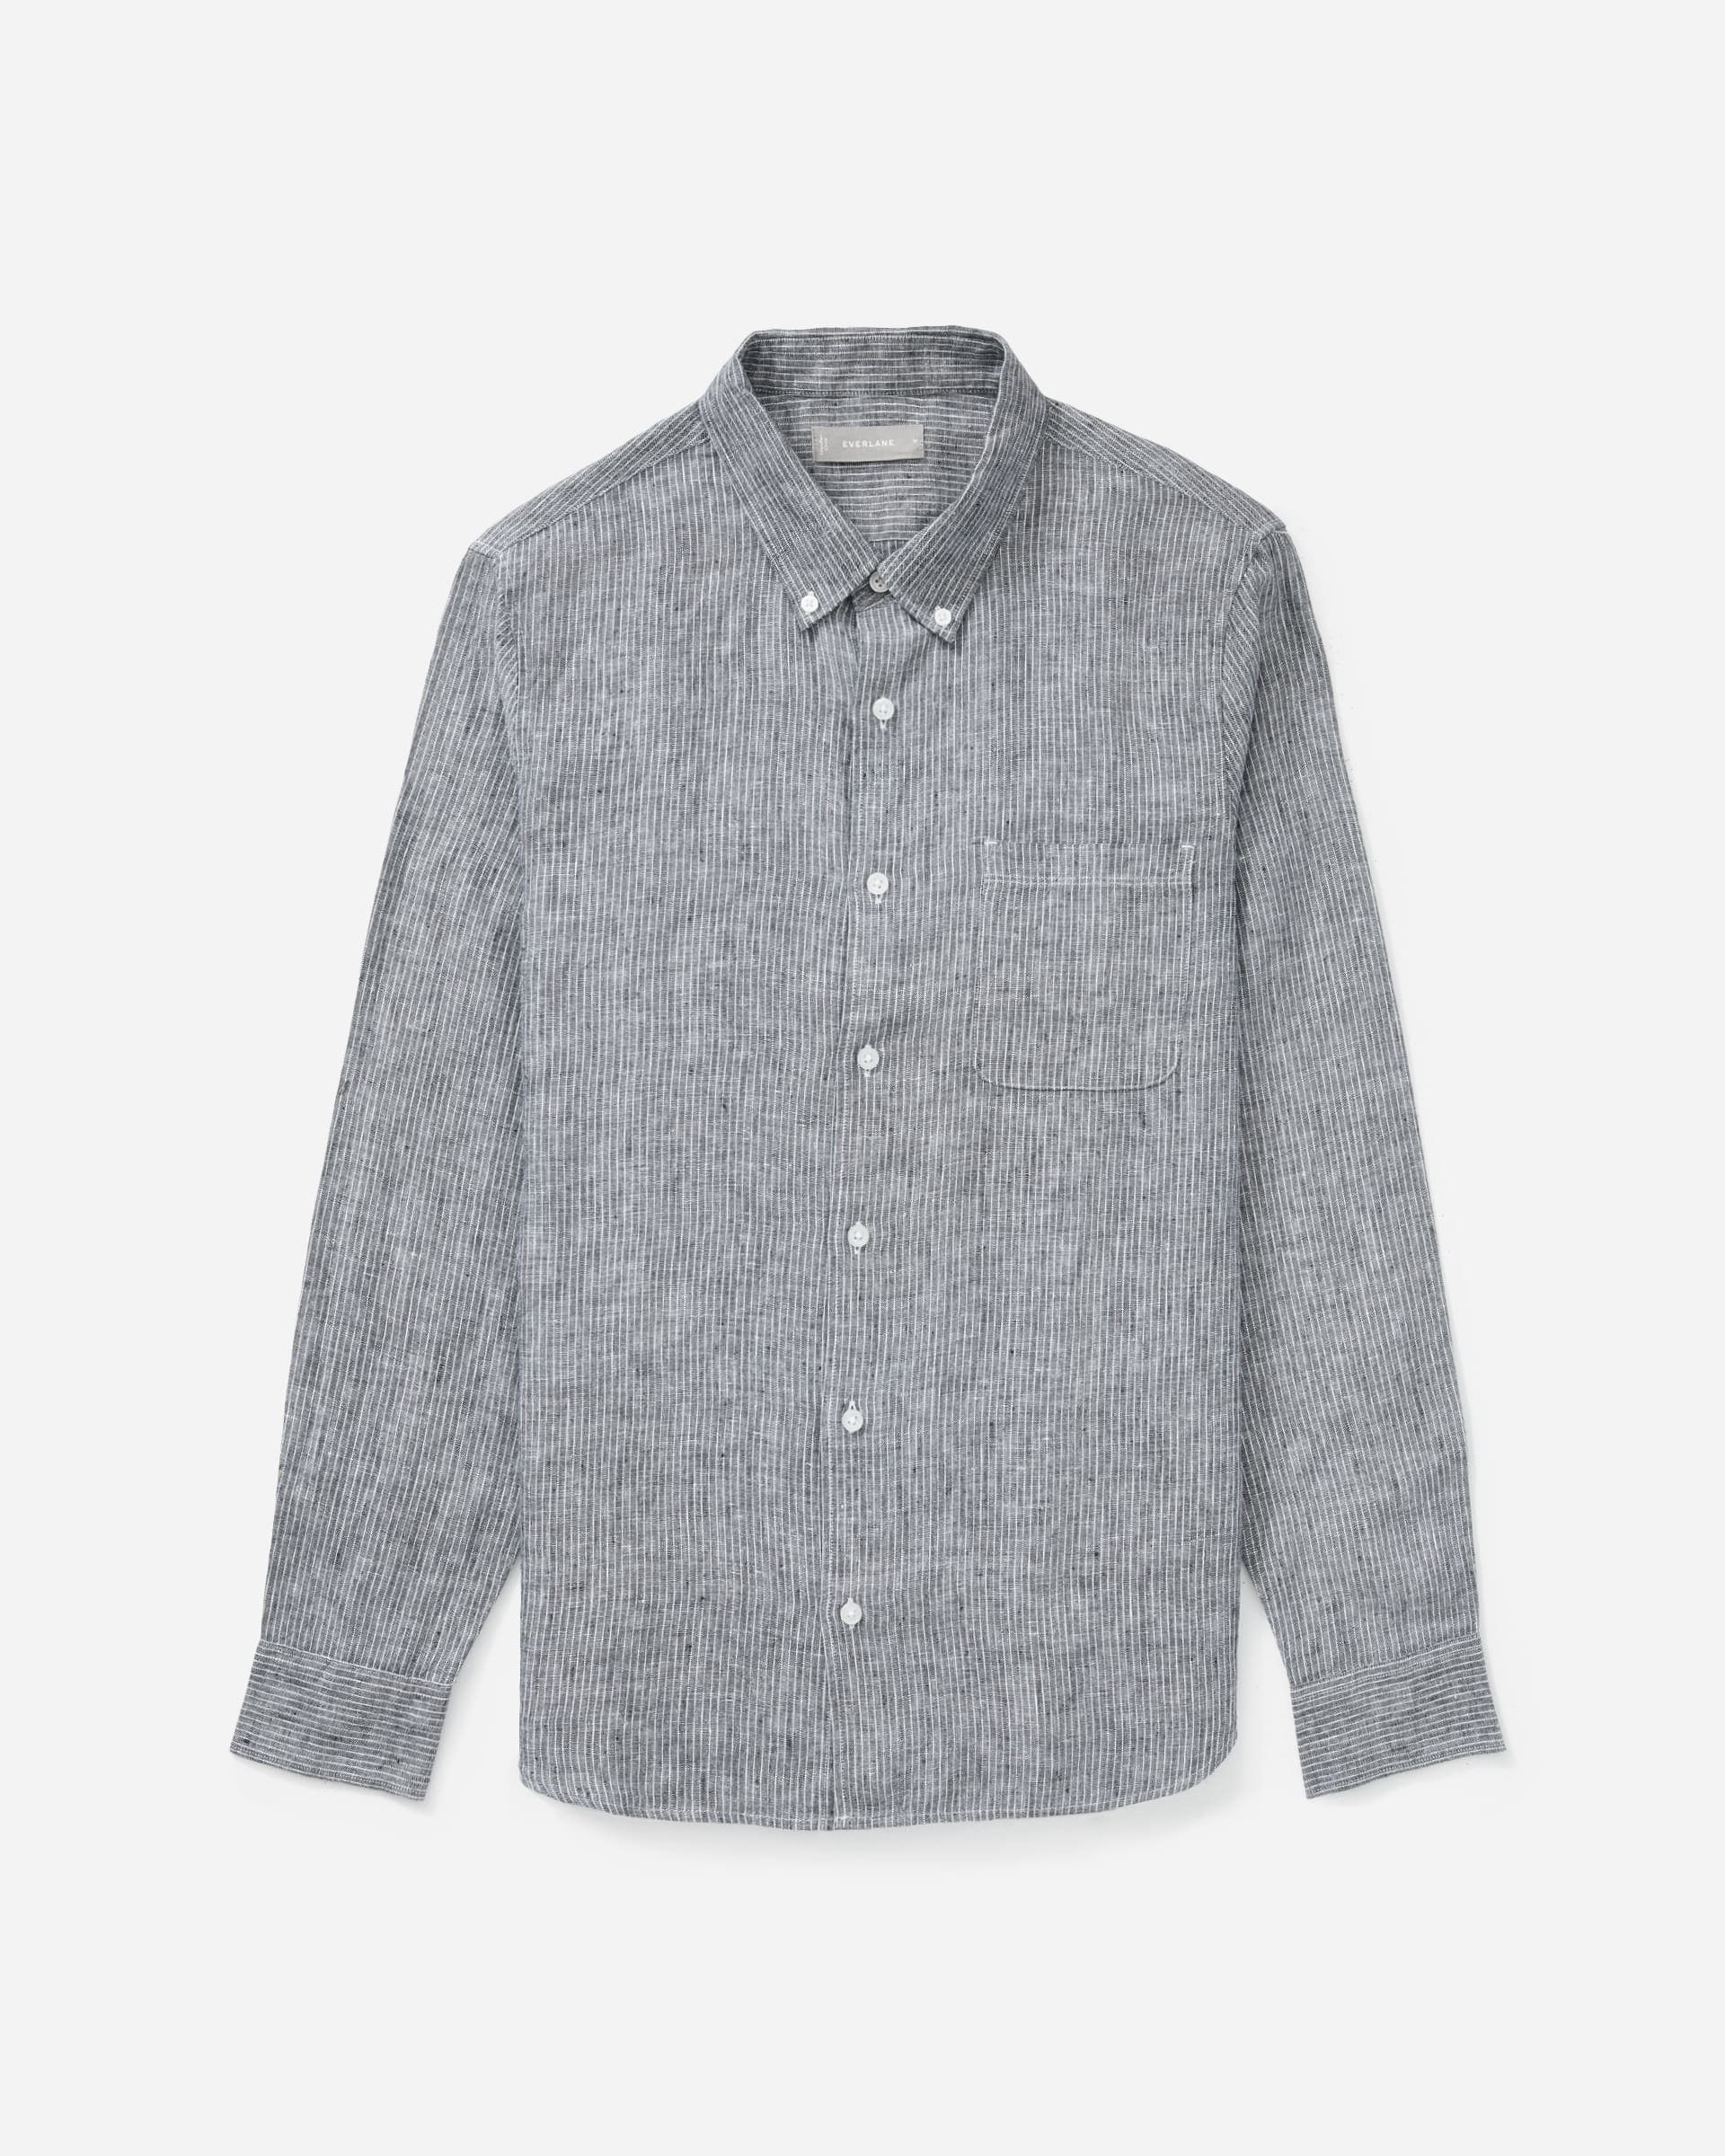 The Linen Standard Fit Shirt Black / White Pinstripe – Everlane